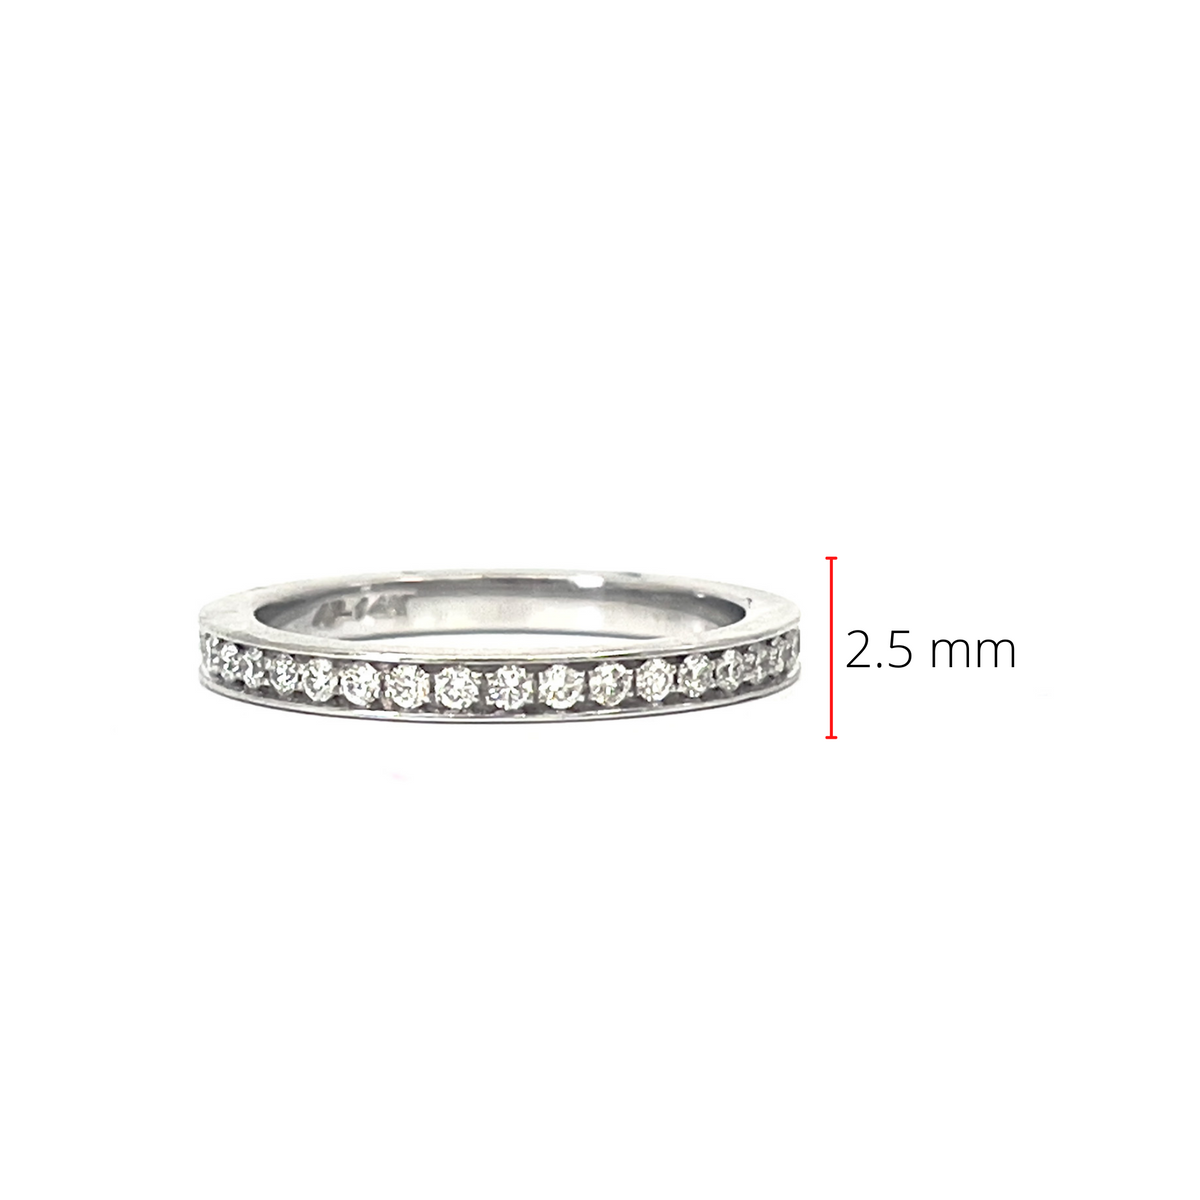 14K White Gold 0.40cttw Diamond Eternity Ring - Size 6.5